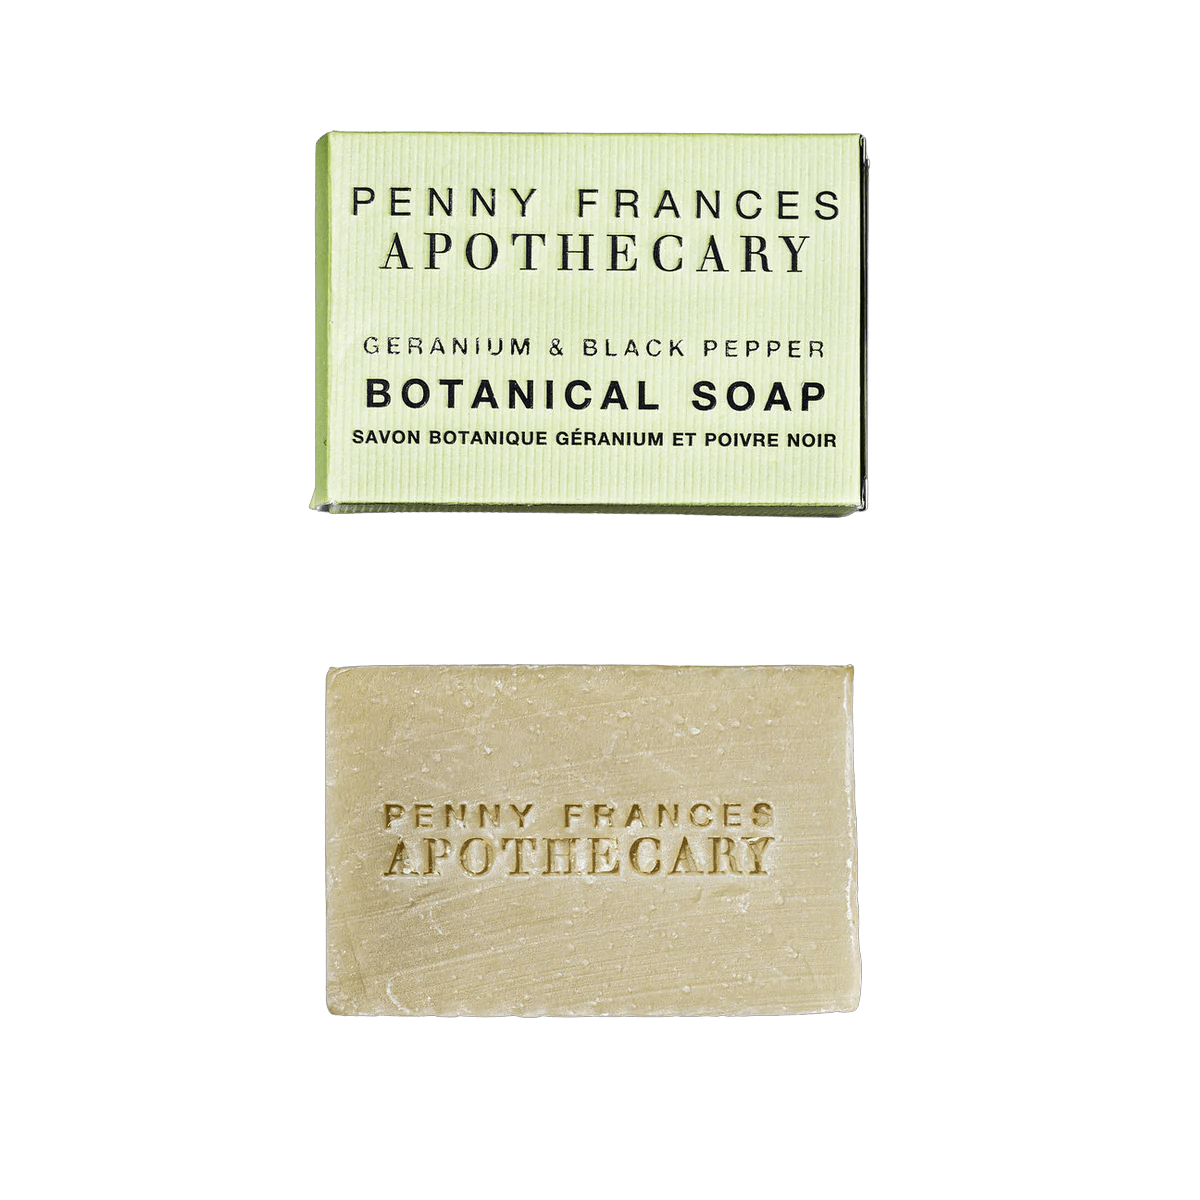 Penny Frances Apothecary soap Botanical Soap - Geranium & Black Pepper sunja link - canada